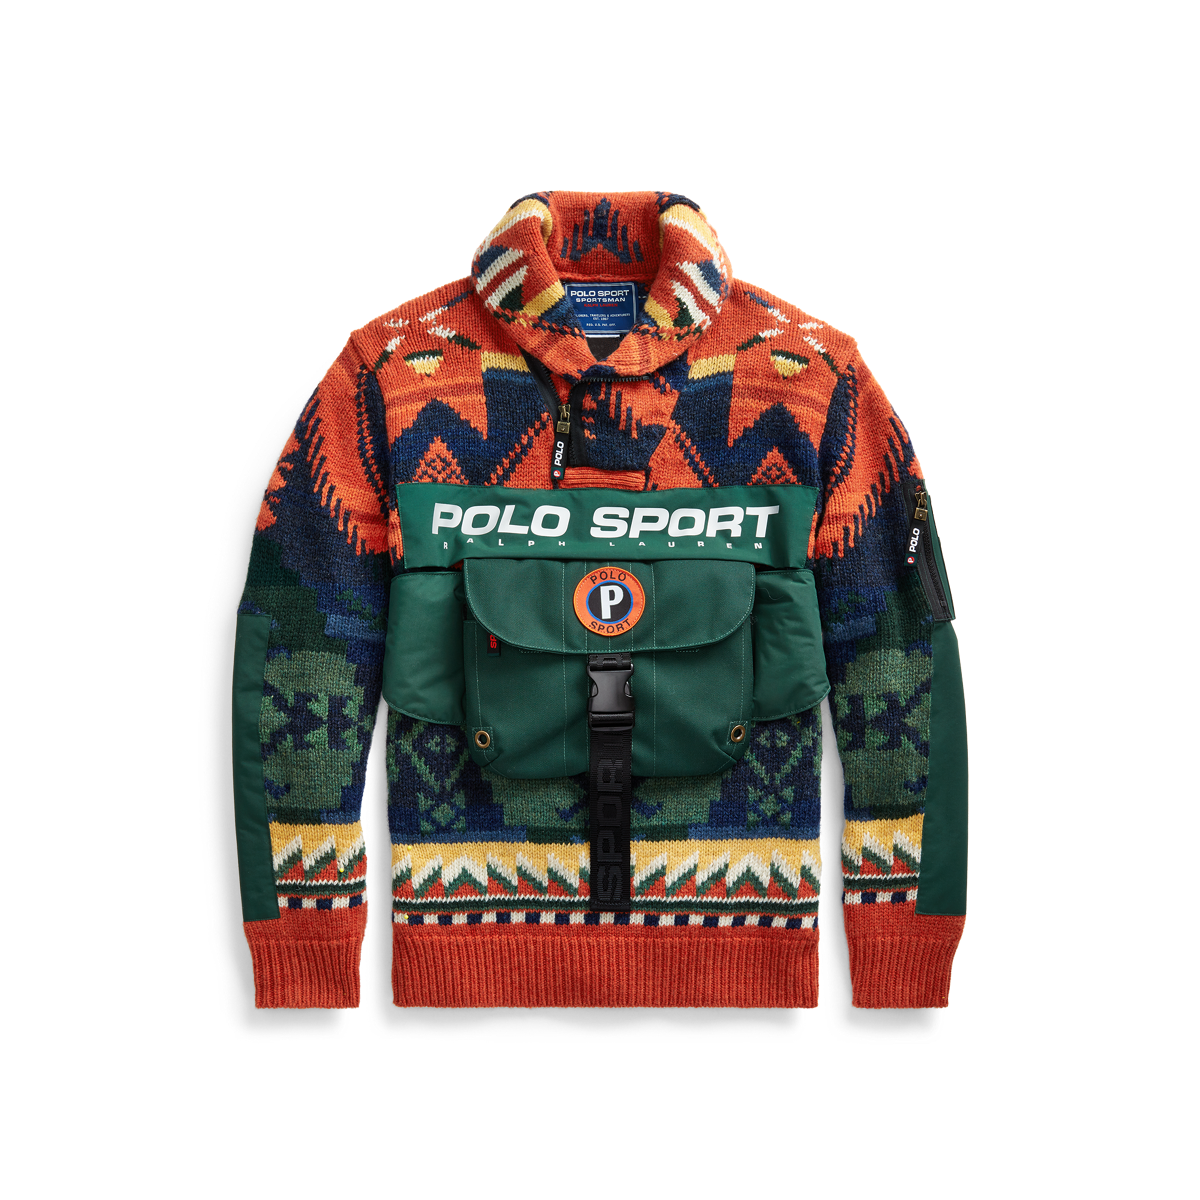 Ralph Lauren - Meet the #PoloSport 2-in-1 sweater